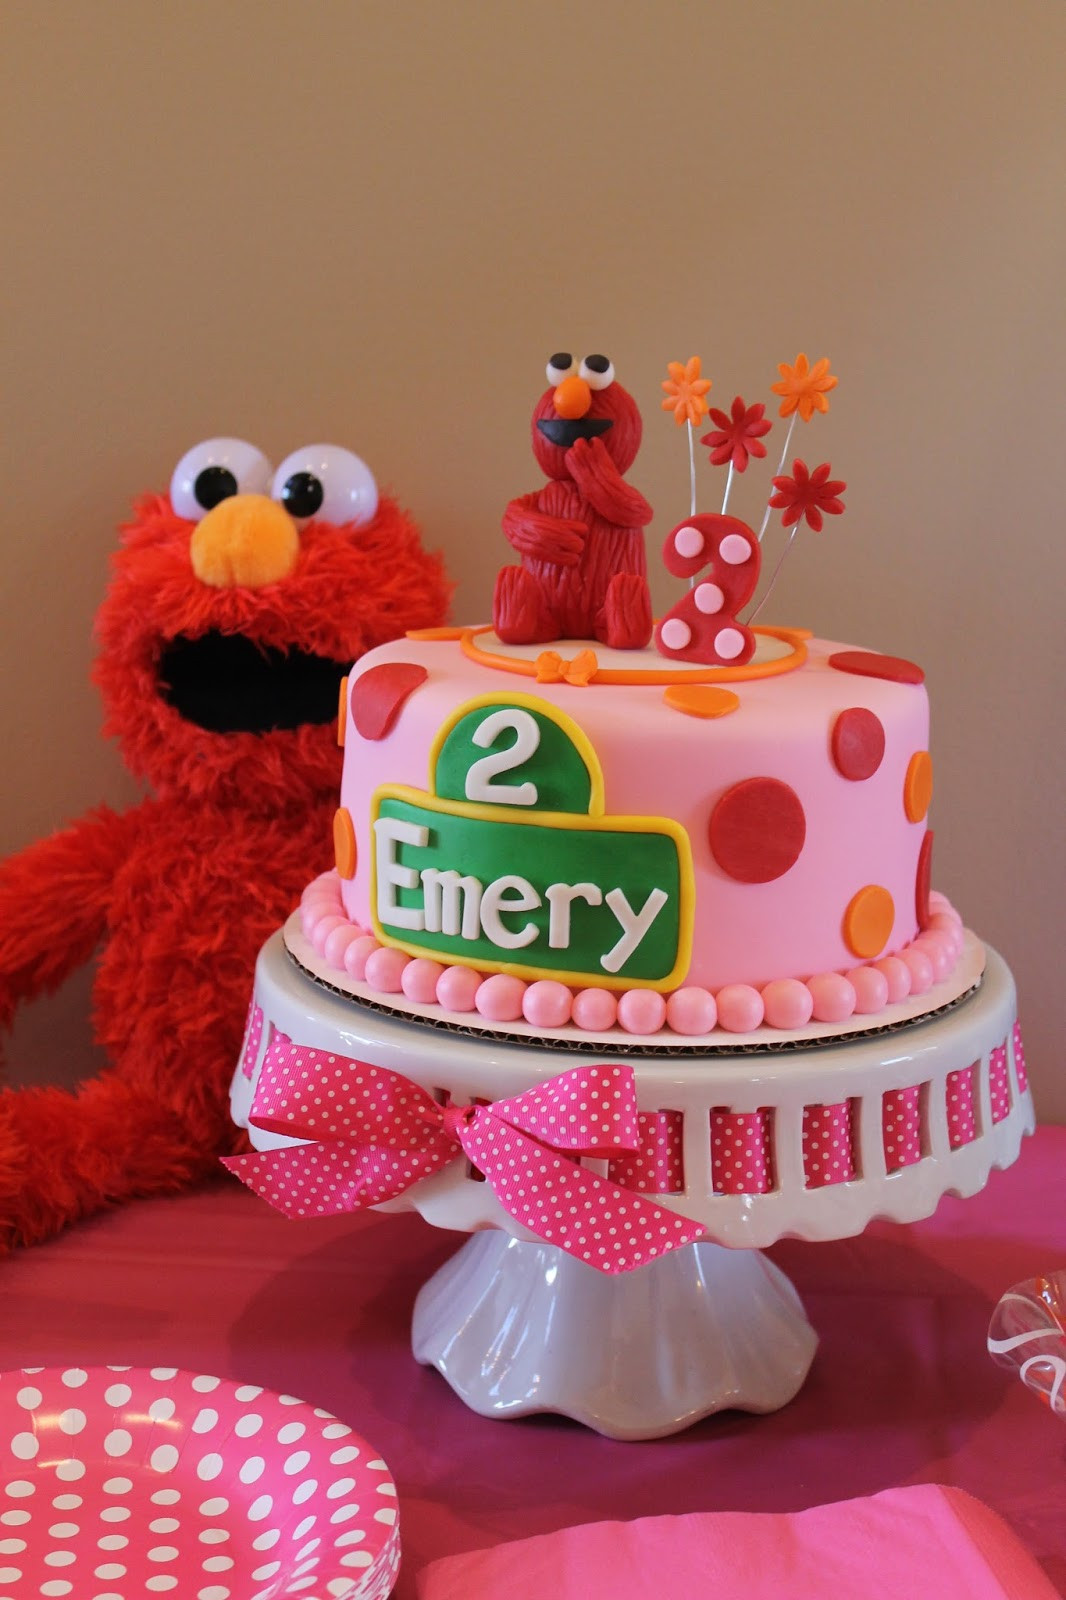 Elmo Birthday Decorations
 Richly Blessed Emery Turns TWO Elmo Birthday Party